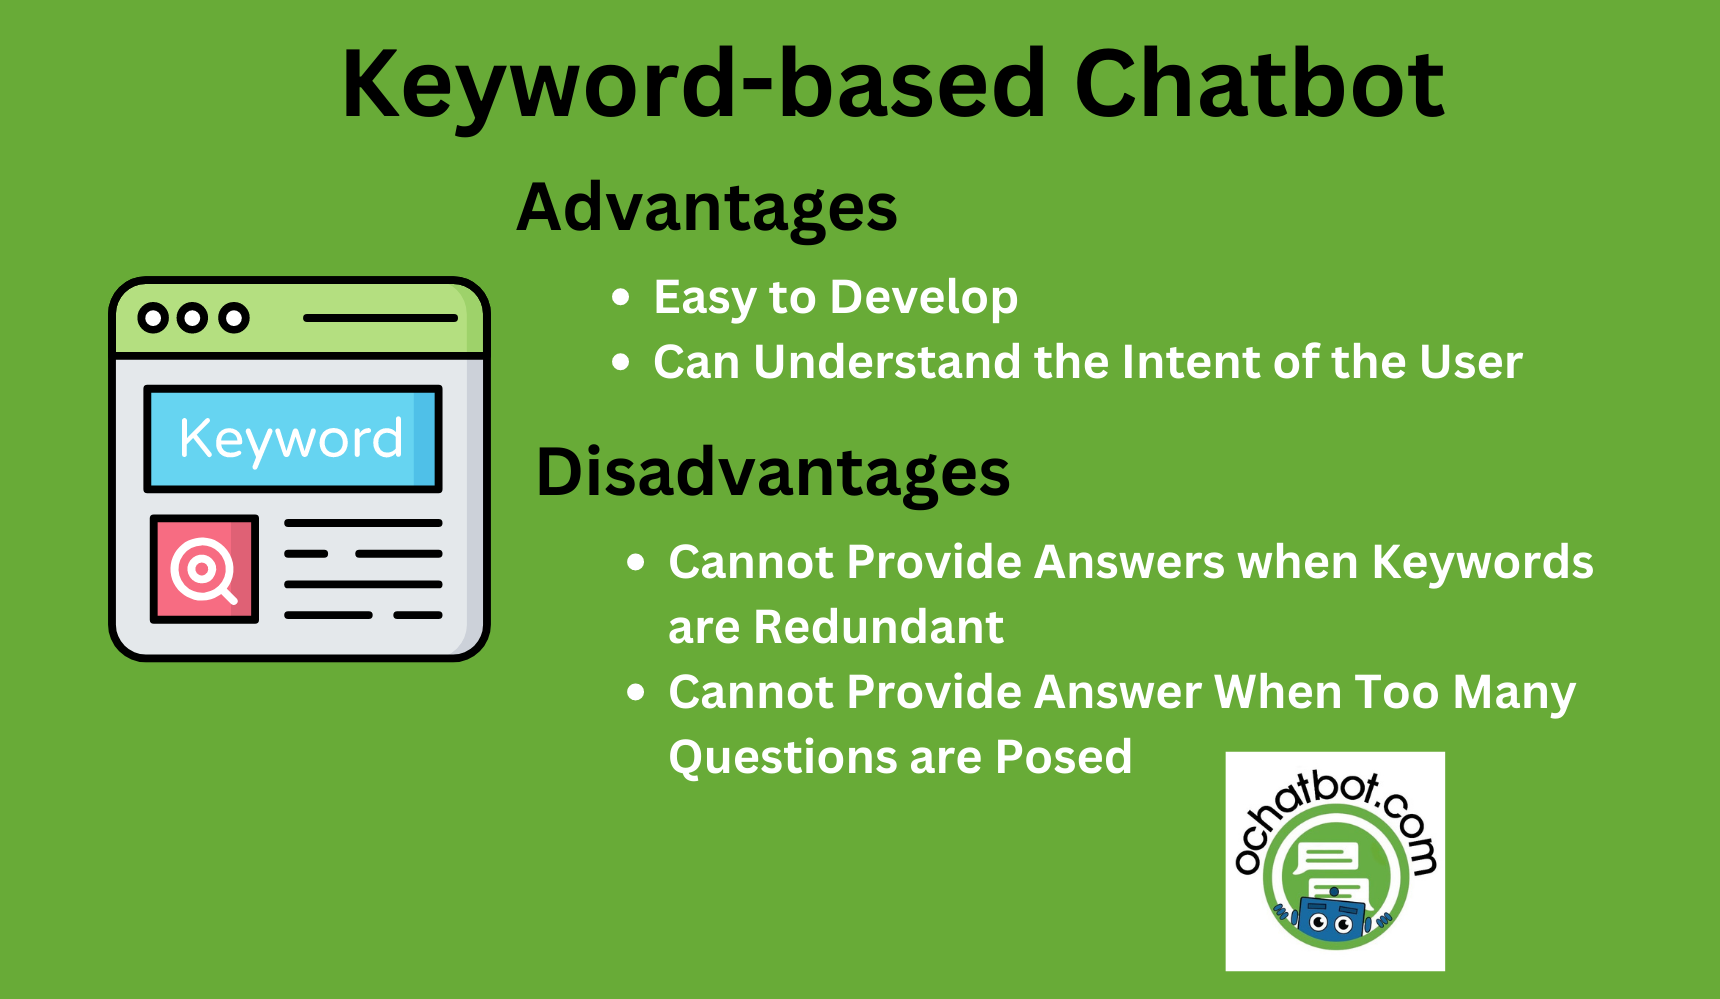 Keyword Recognition Based Chatbots